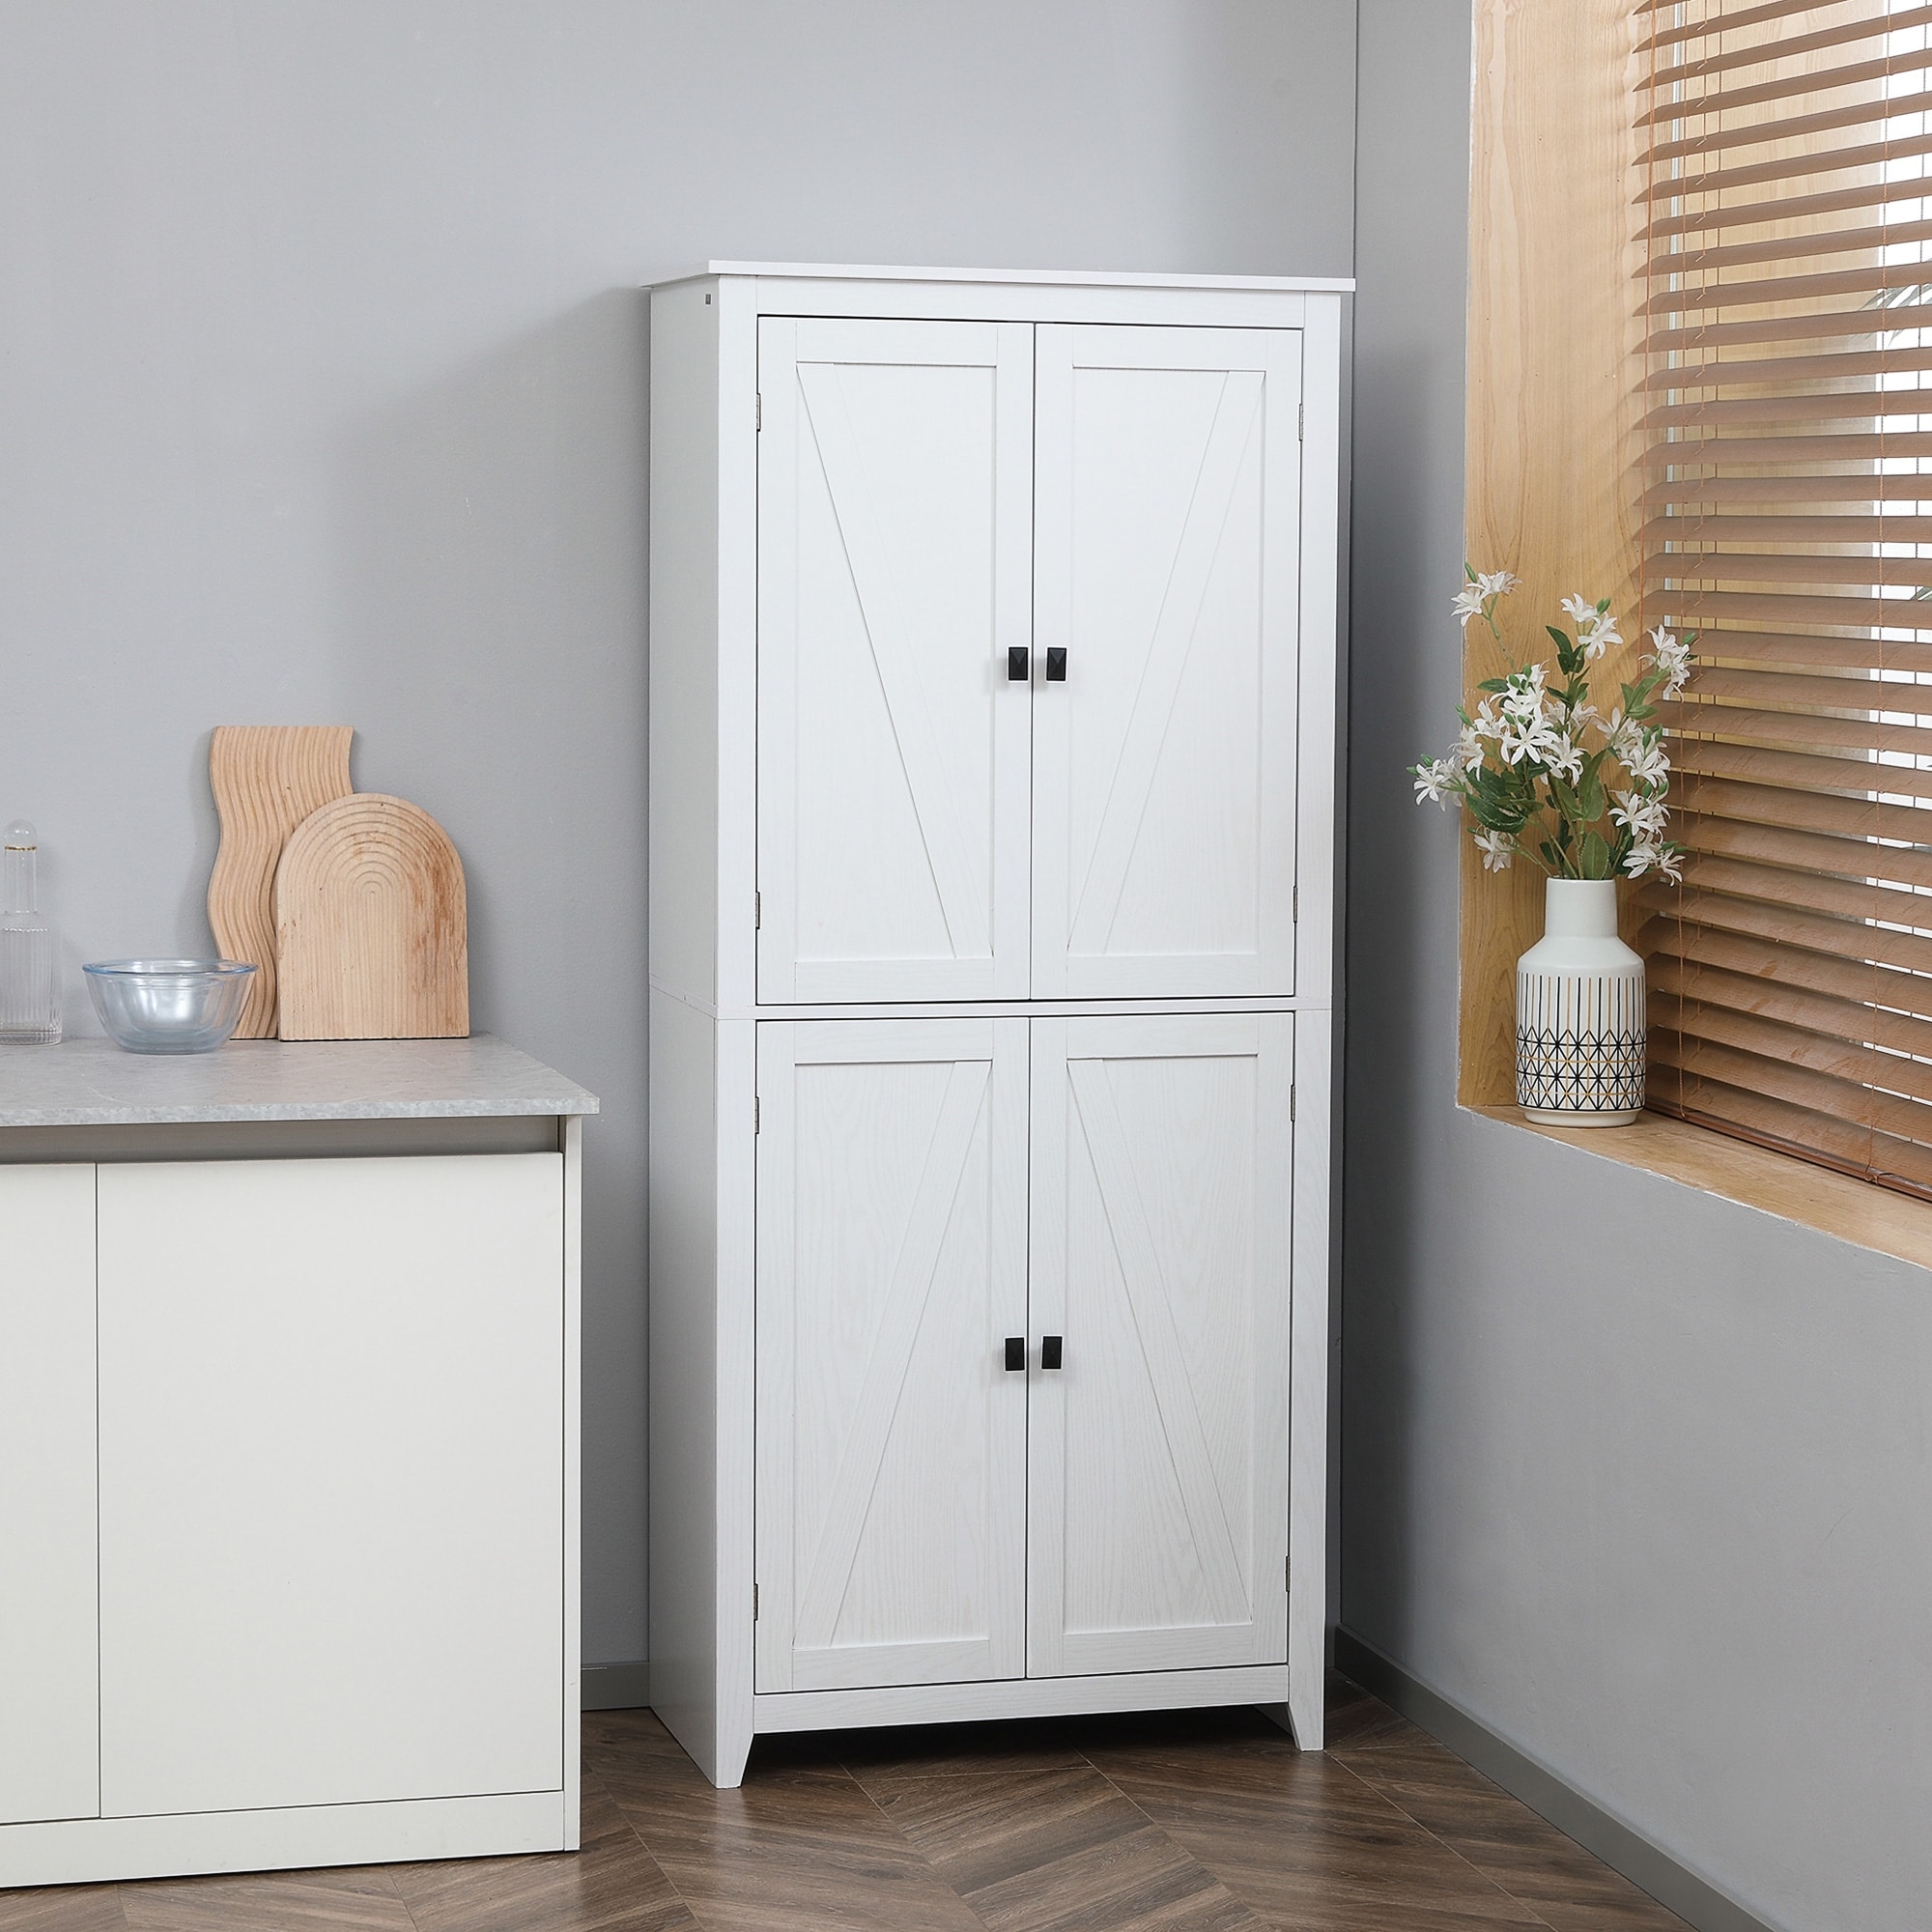 HOMCOM 64 4-Door Kitchen Pantry, Freestanding Storage Cabinet with 3 Adjustable Shelves for Kitchen, Dining or Living Room, Grey